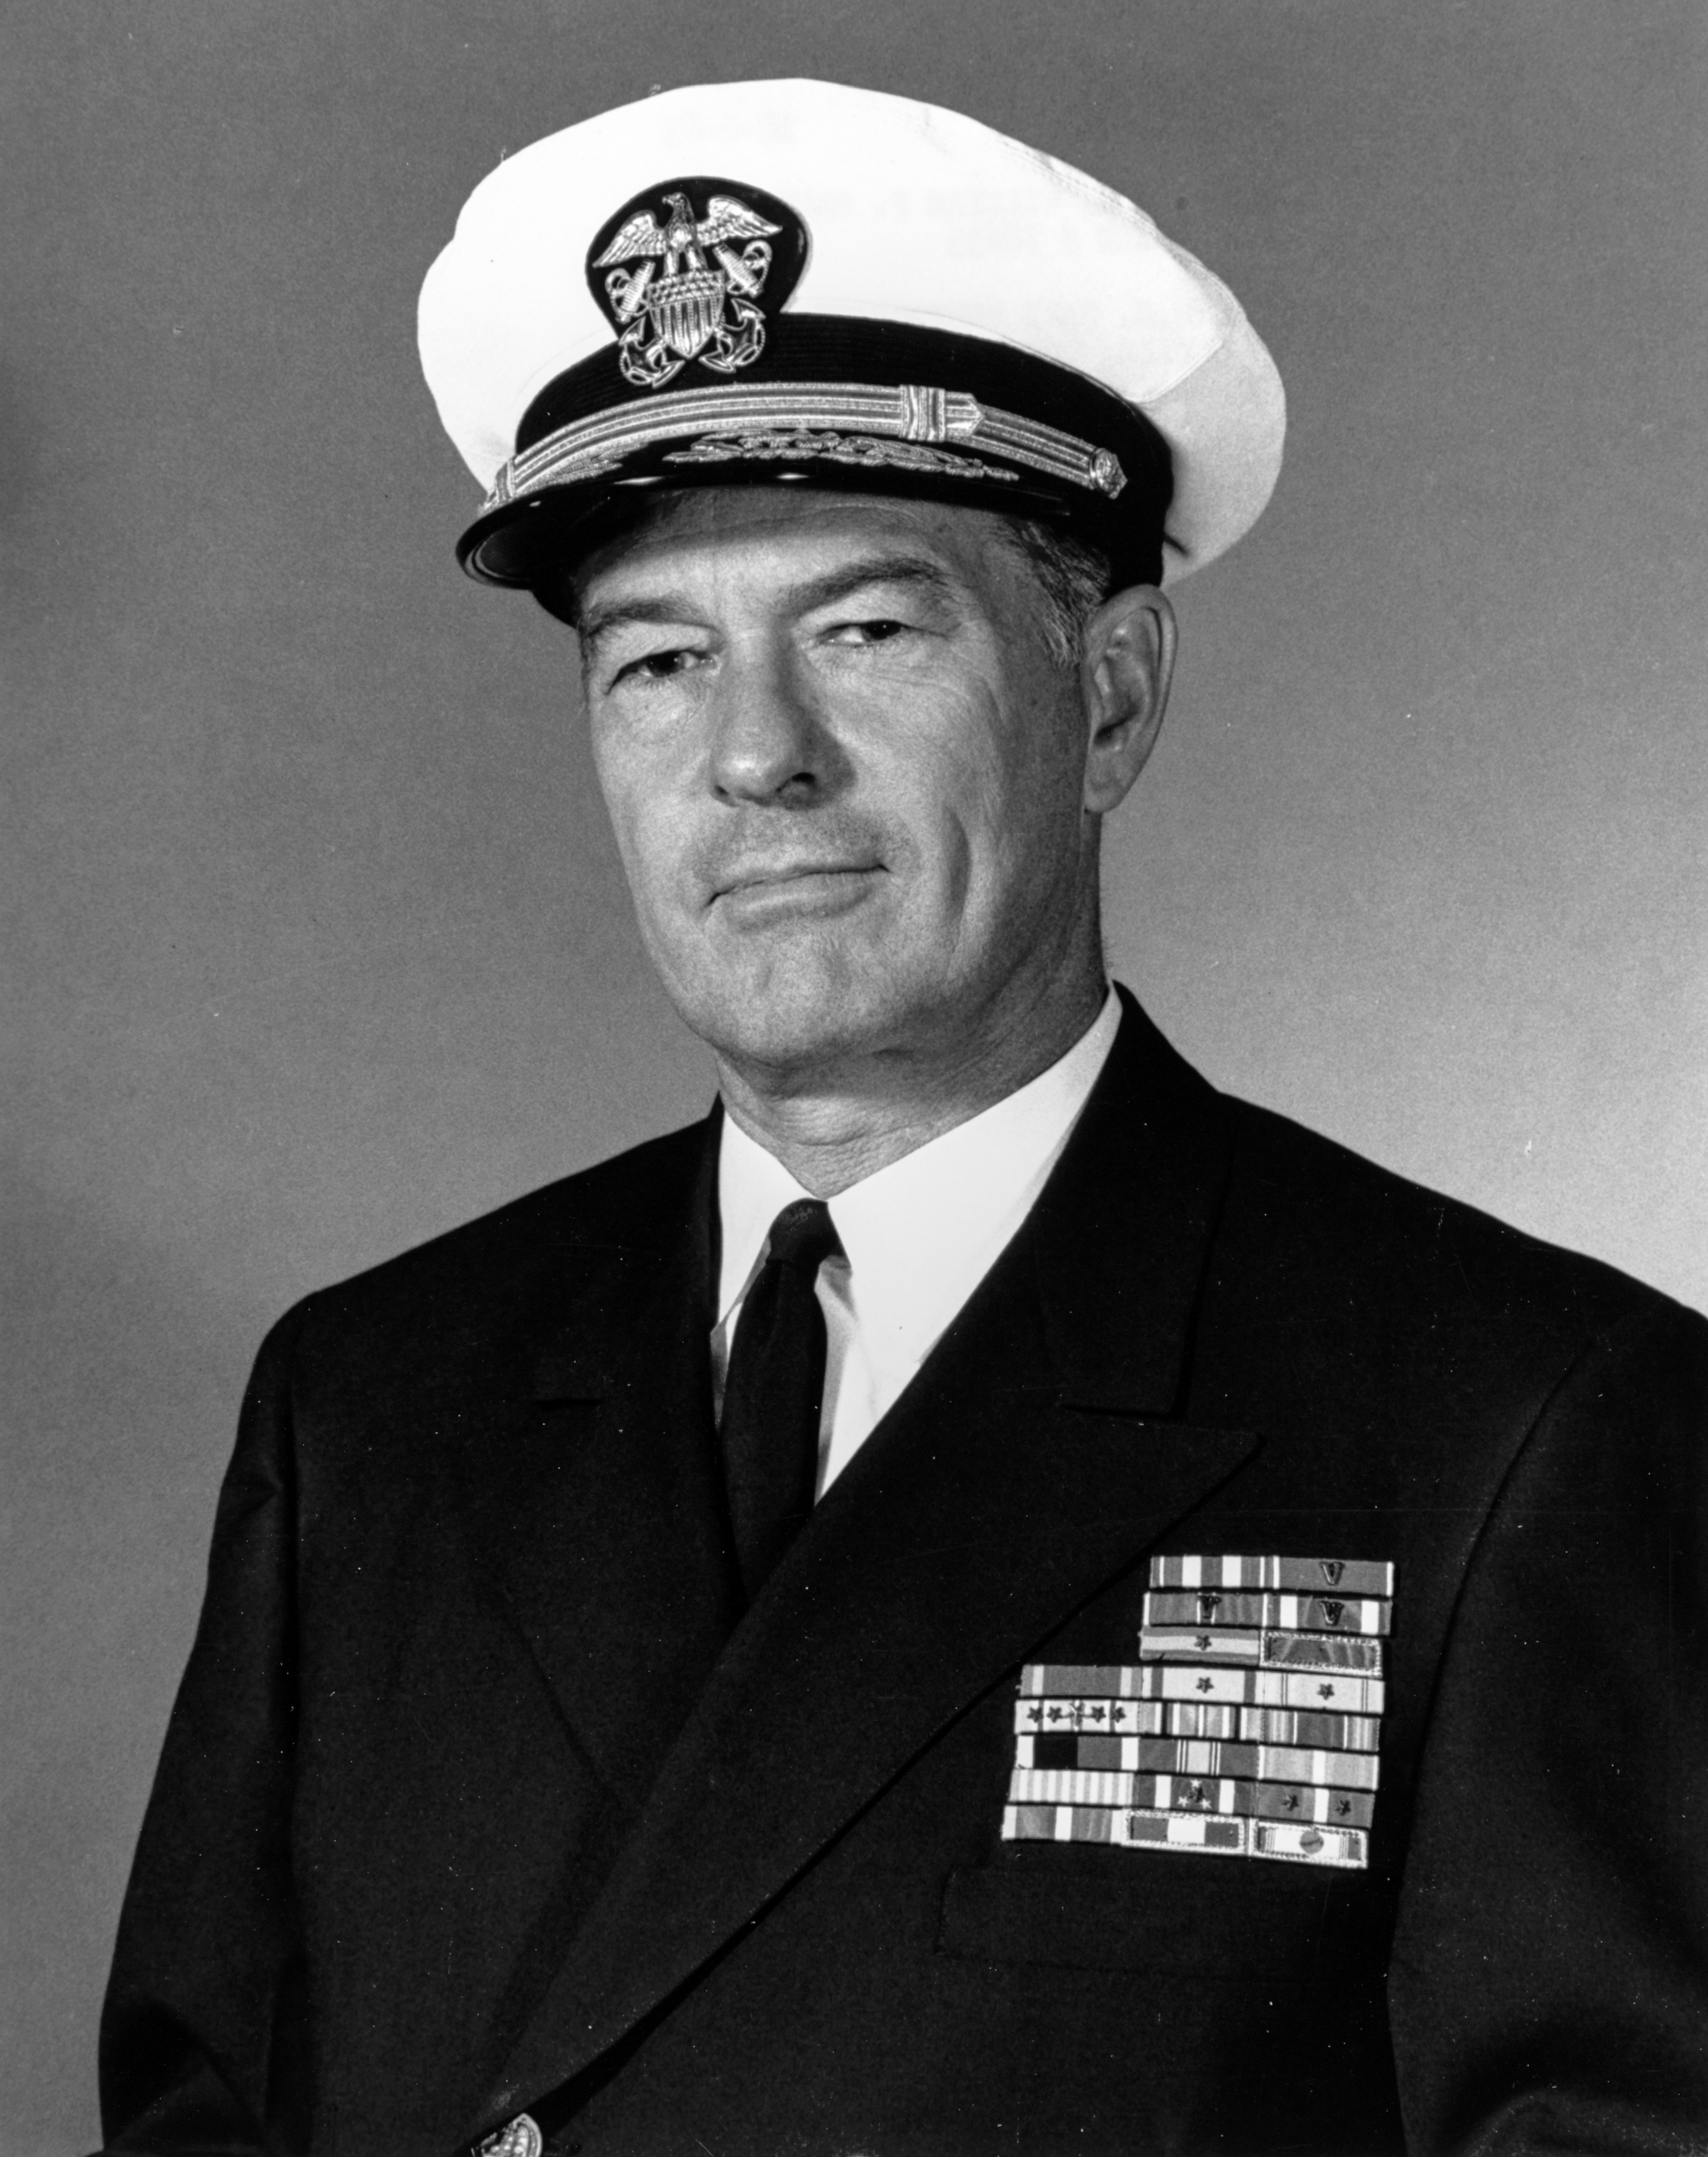 Portrait of Rear Admiral William P. Mack, Sr., U.S. Navy